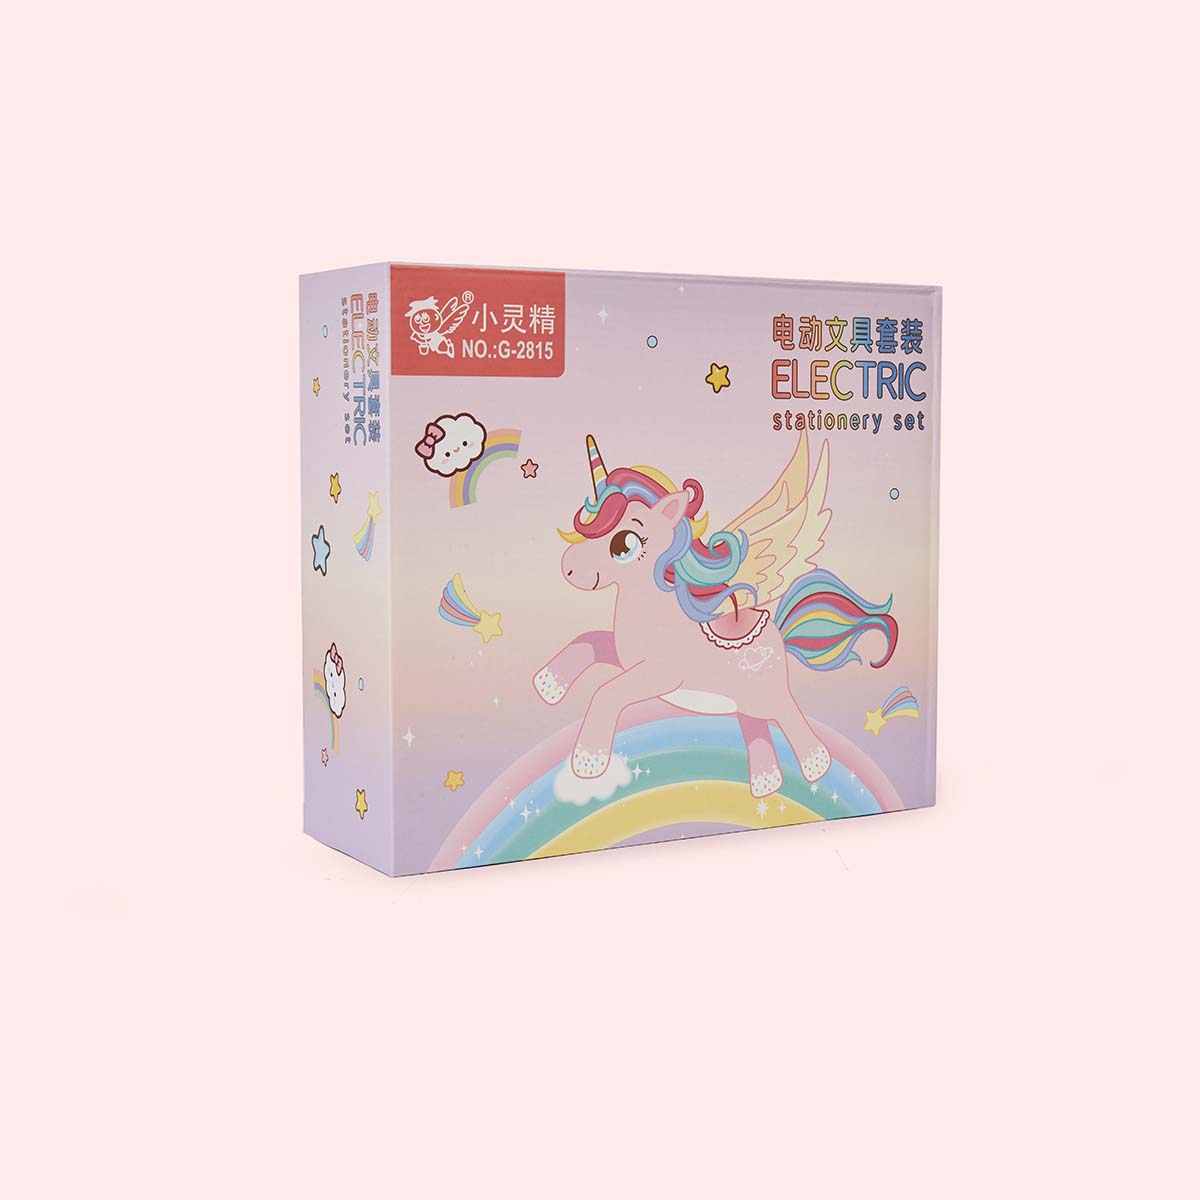 ElectraWrite: Electric Stationery Gift Set - Unicorn